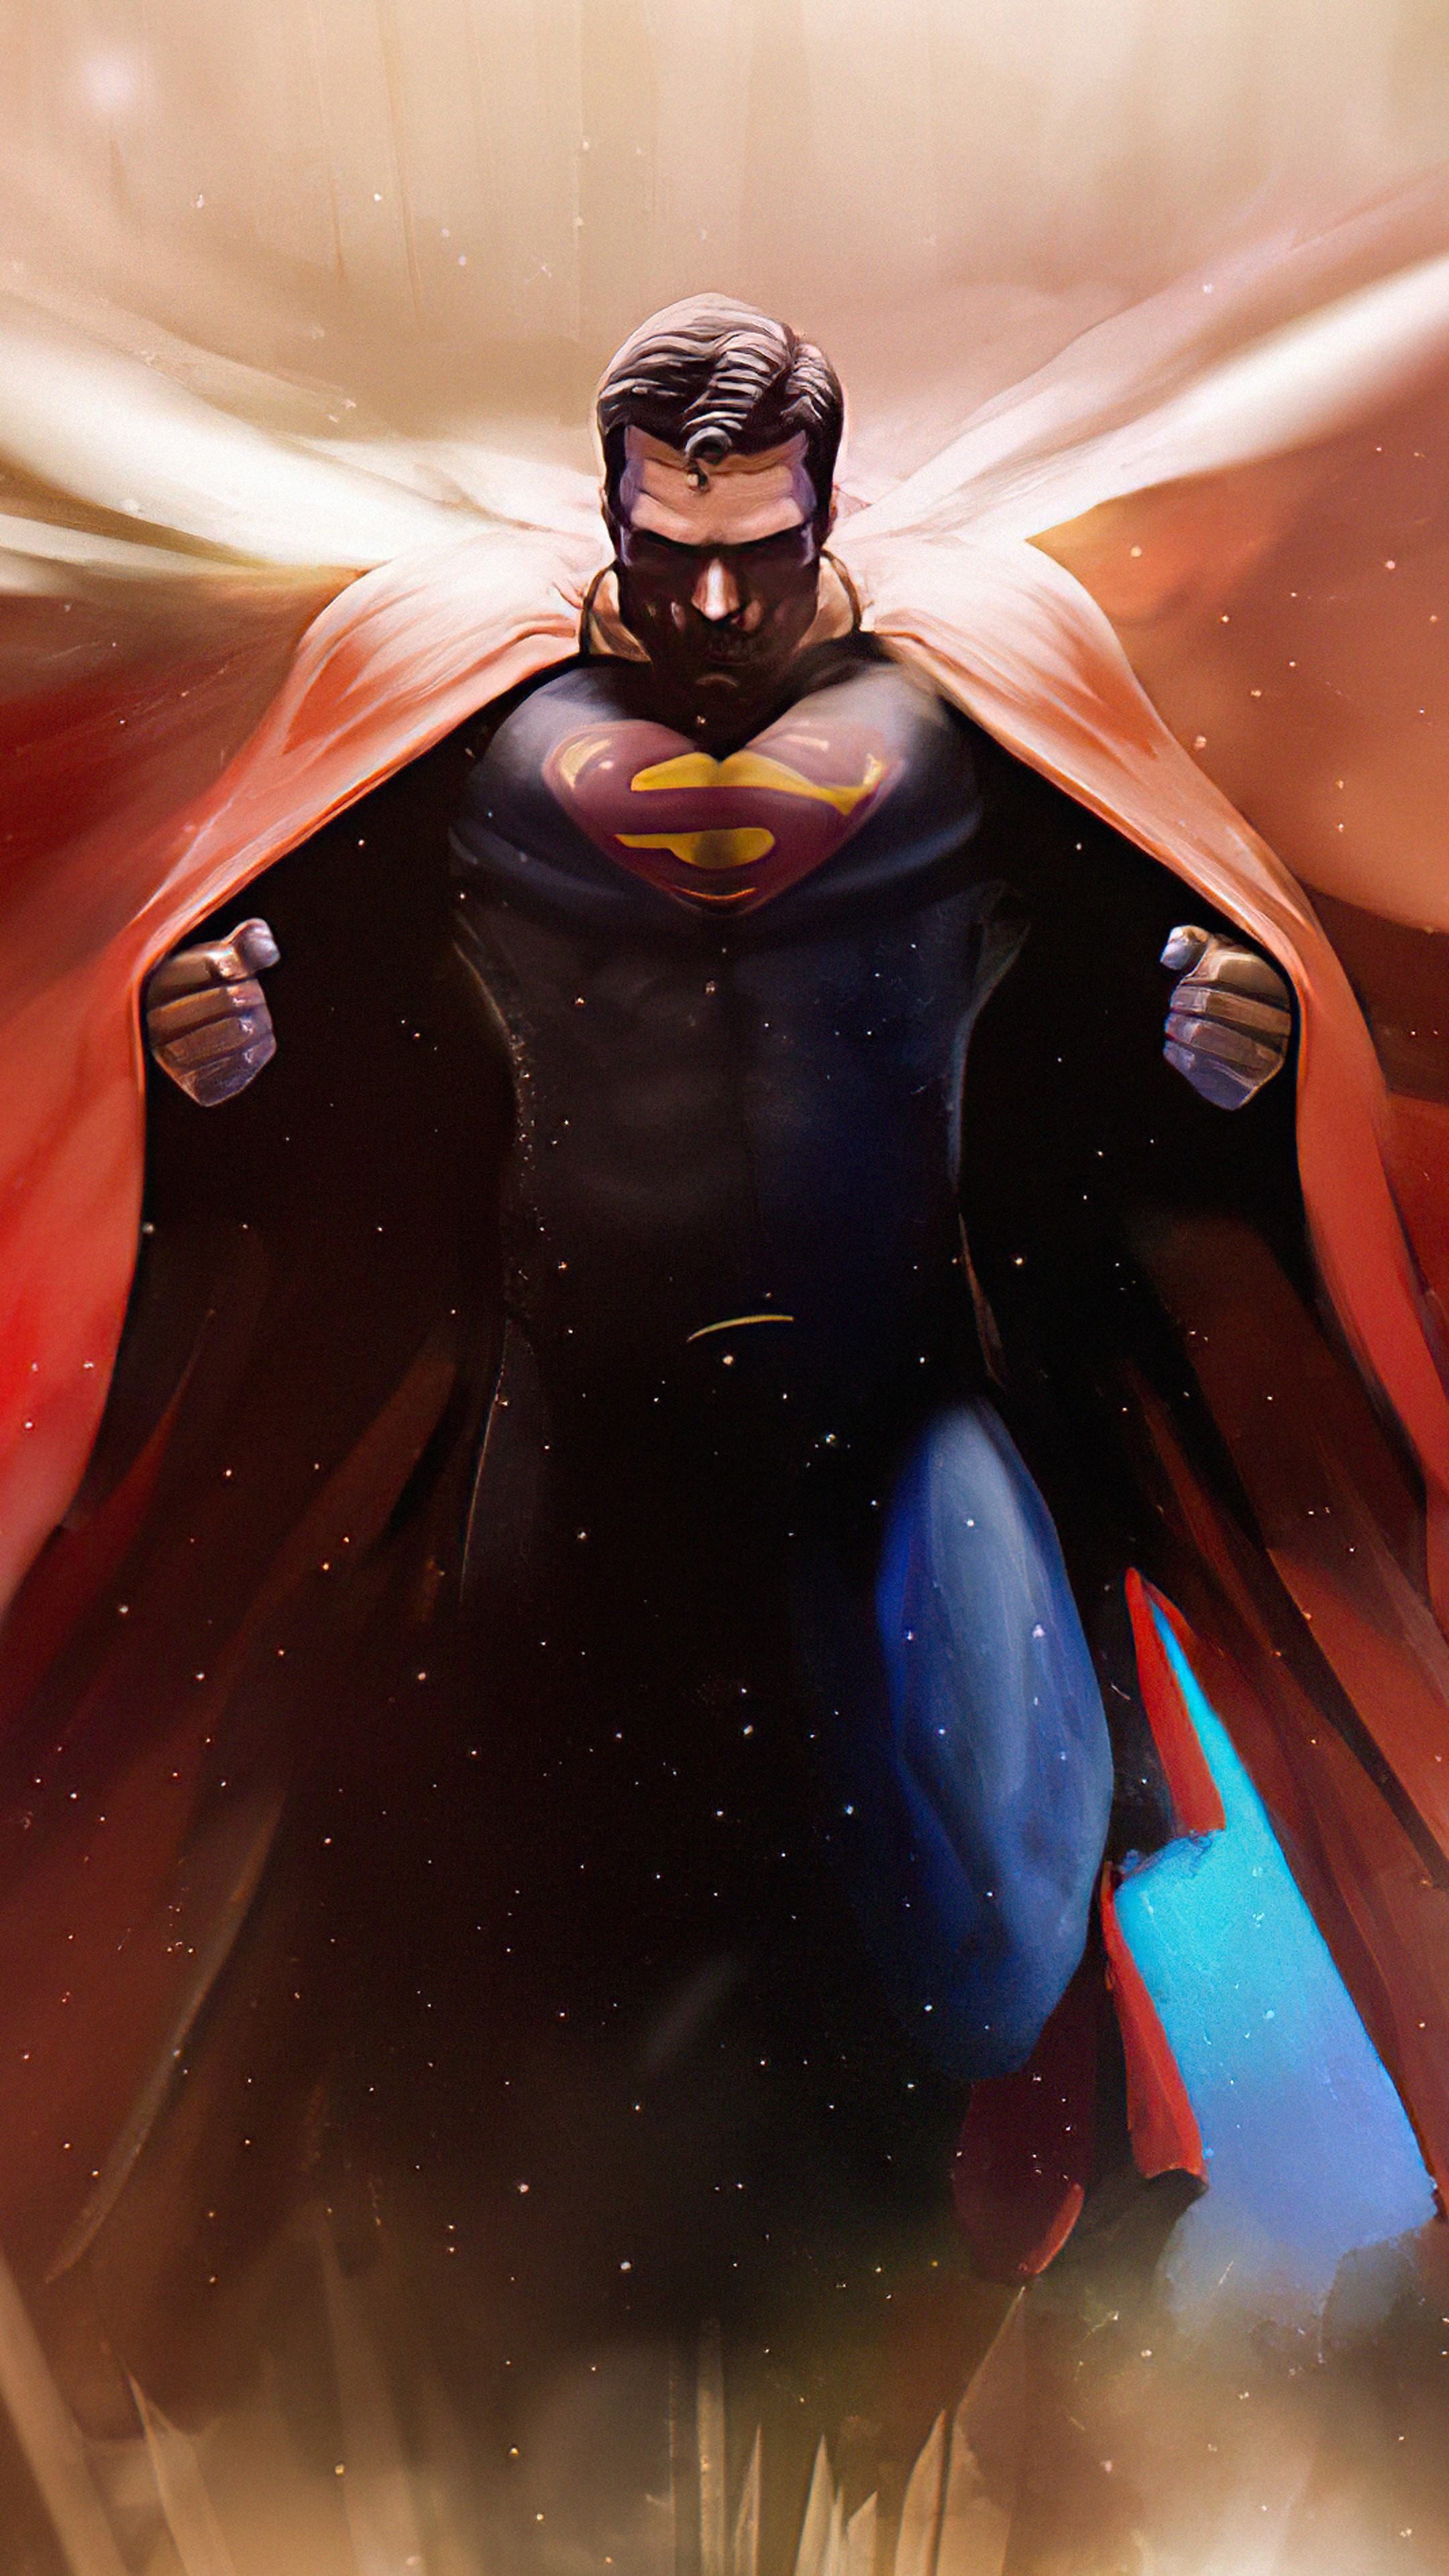 Superman superhero artwork, Sony Xperia edition, 2160x3840 4K Handy